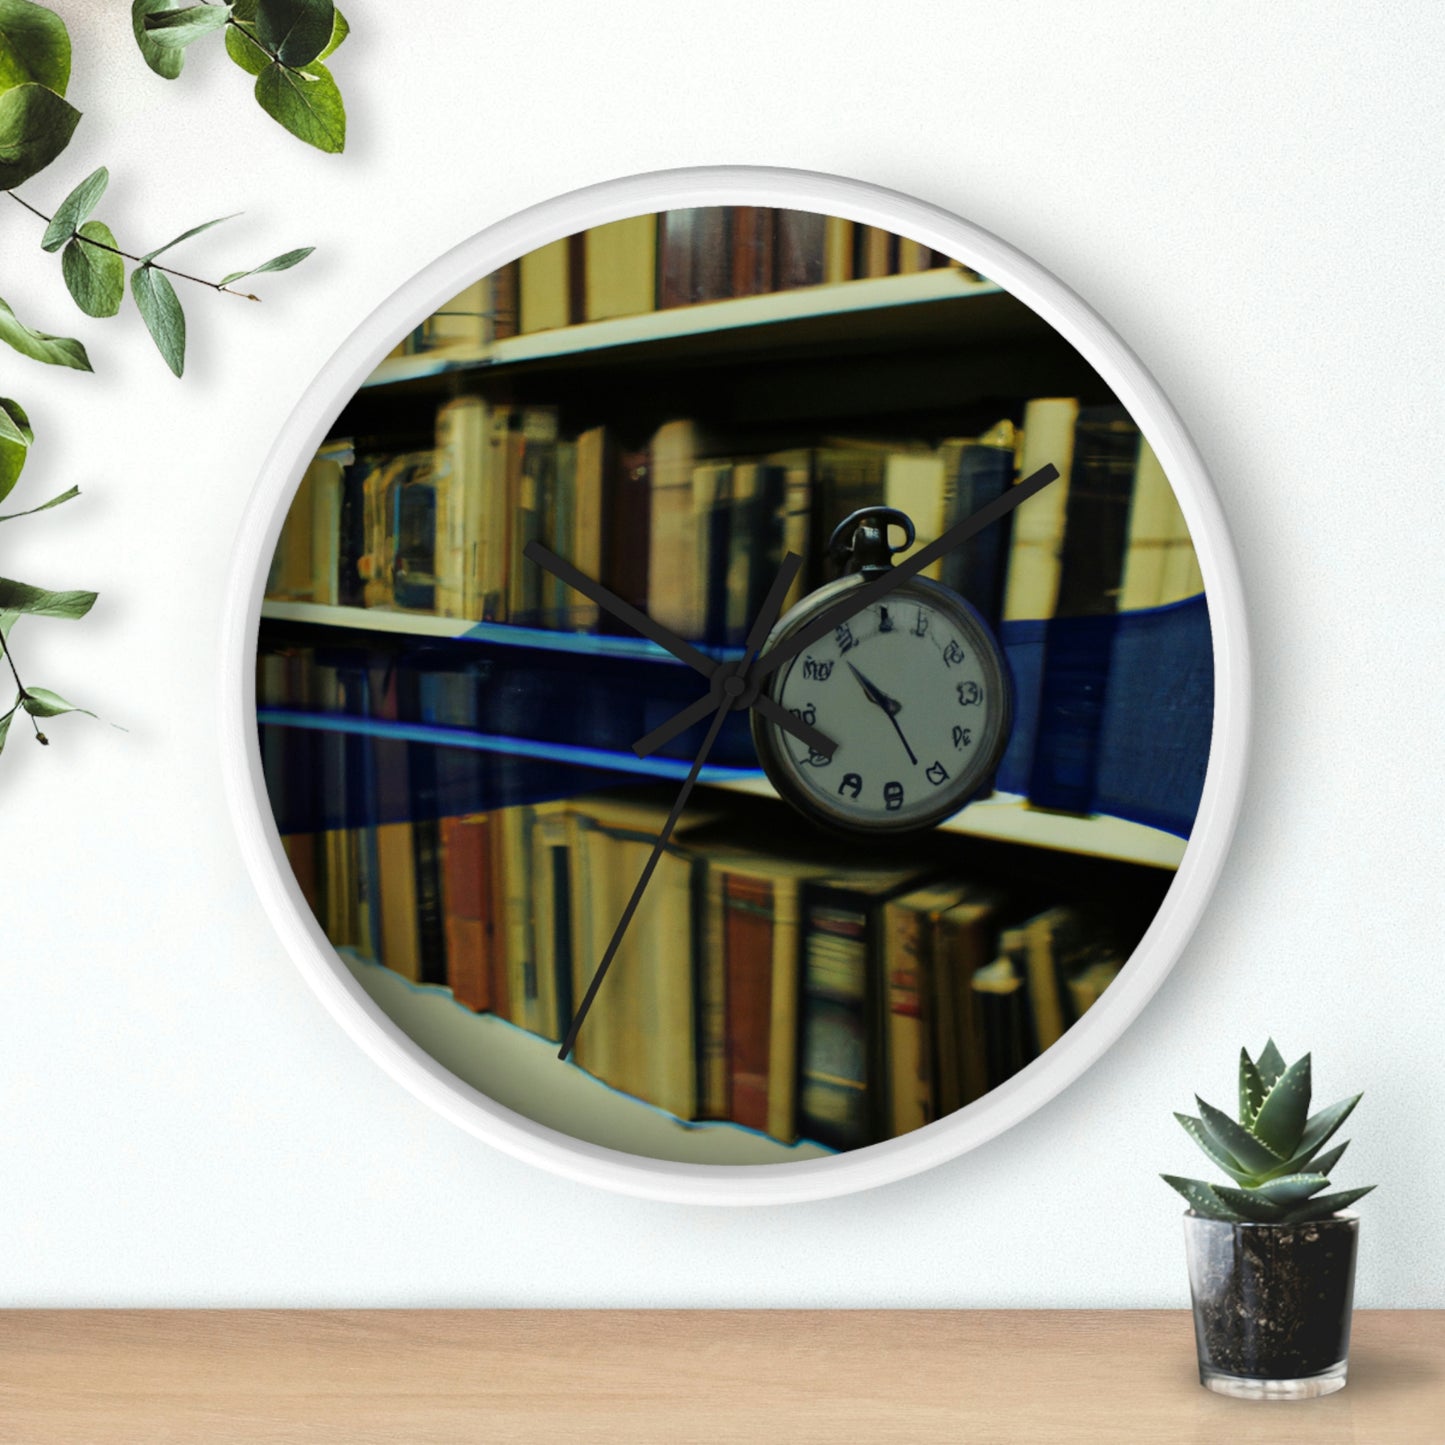 "The Infinite Bookshelf" - The Alien Wall Clock